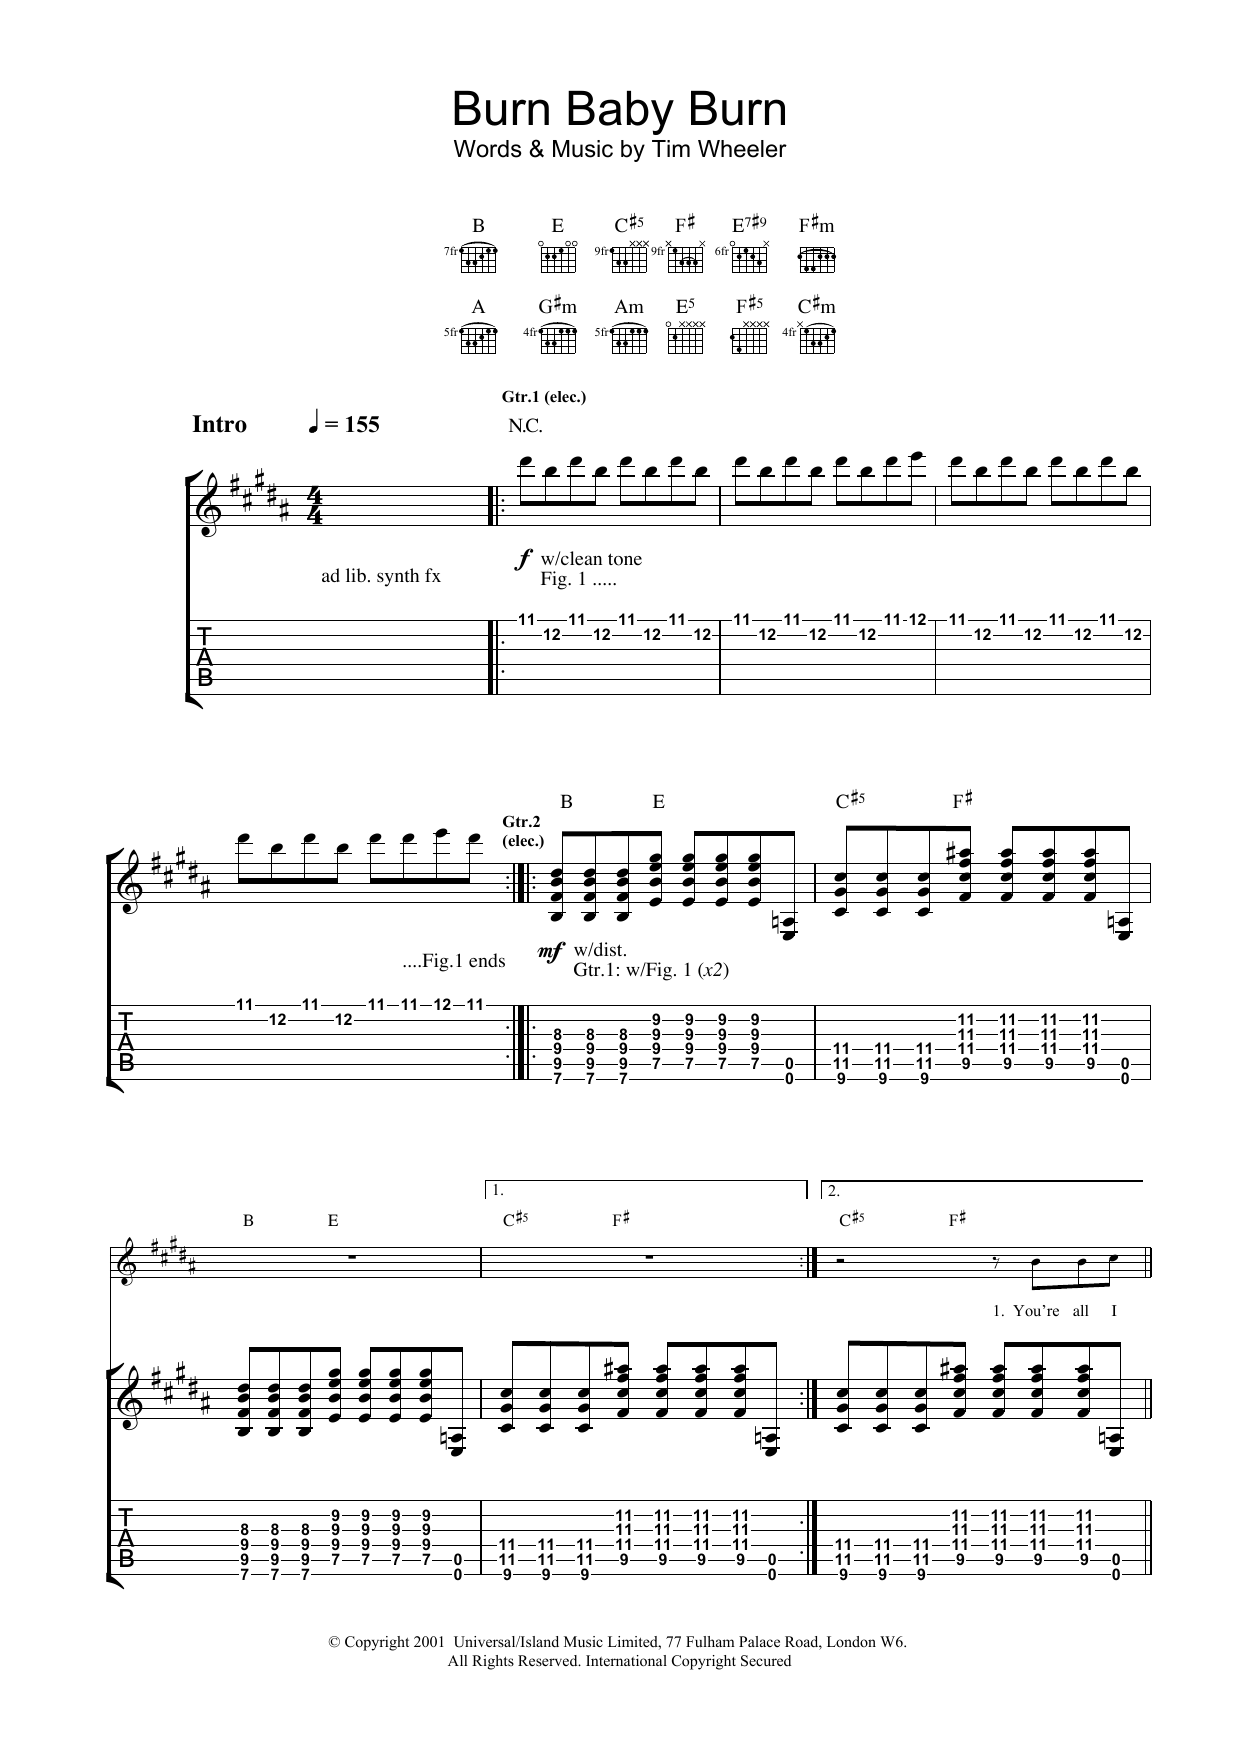 Ash Burn Baby Burn Sheet Music Notes & Chords for Guitar Tab - Download or Print PDF